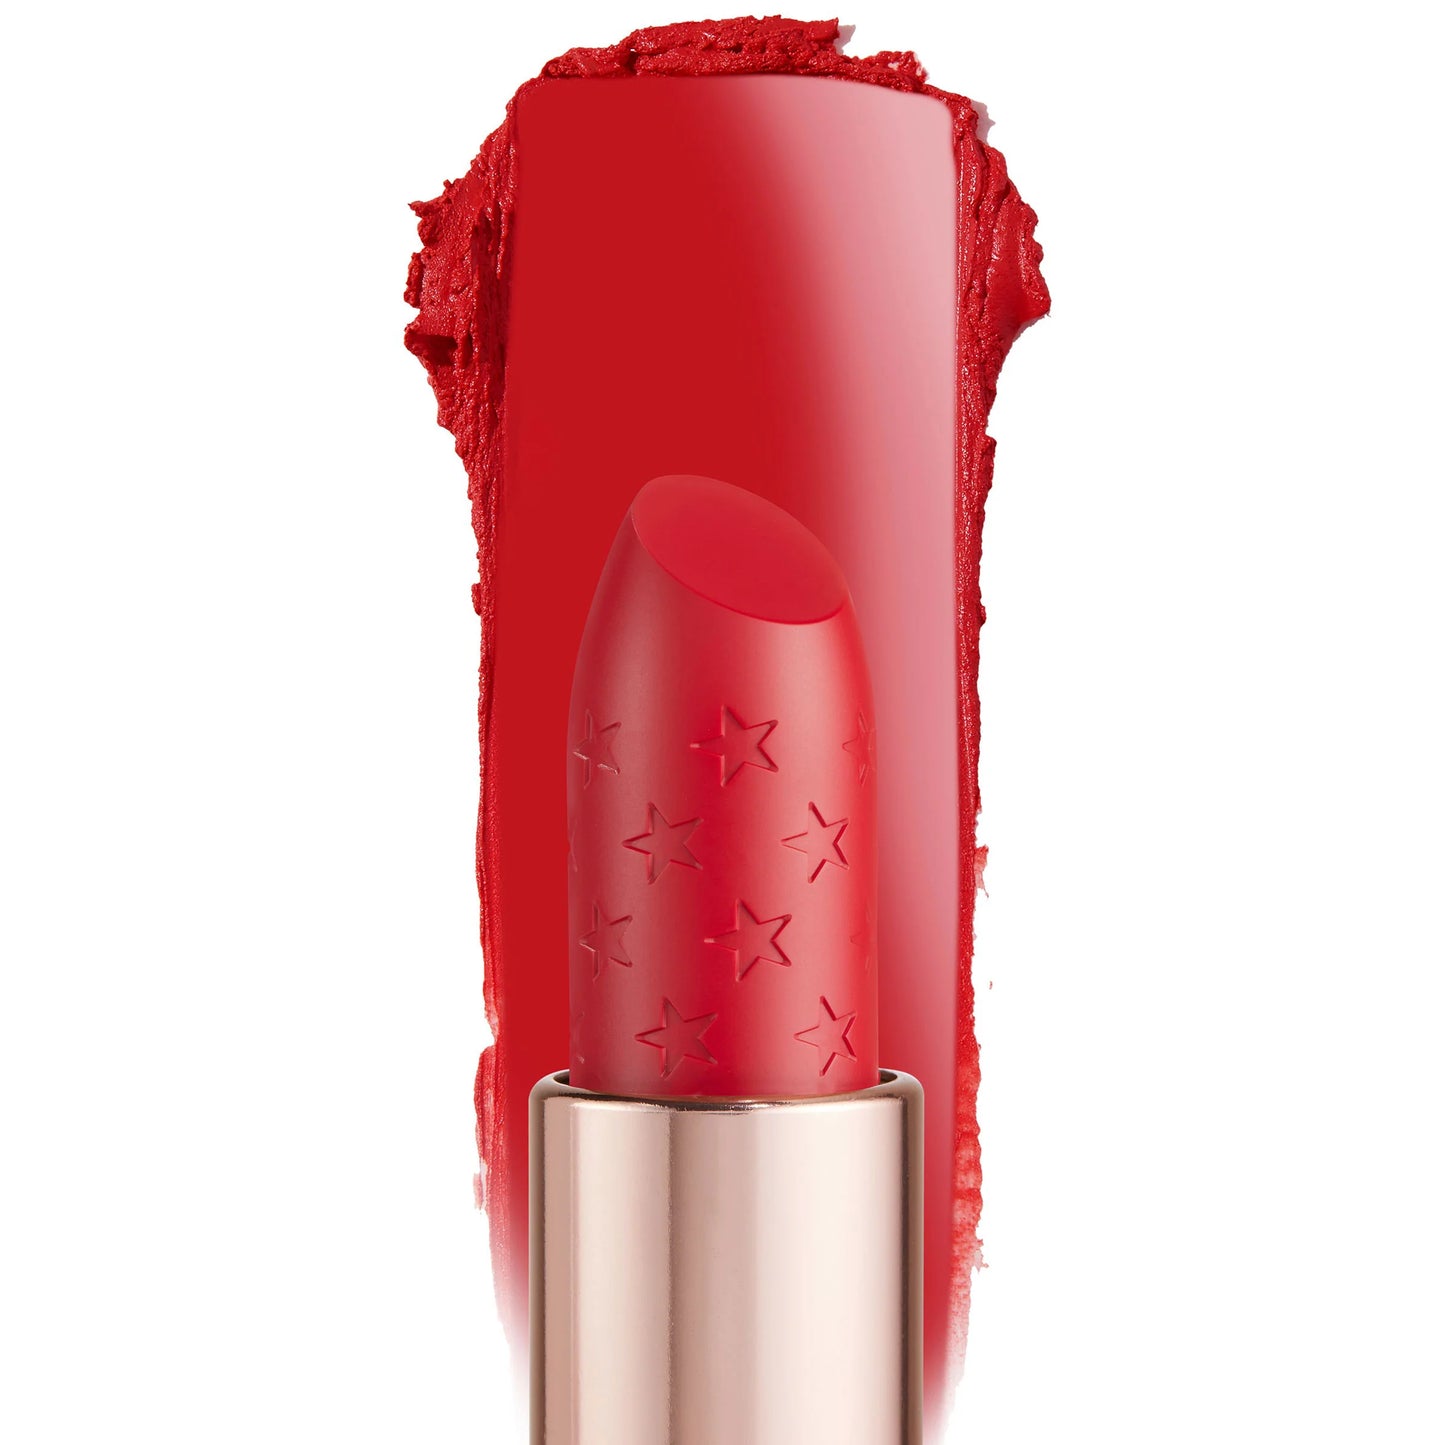 Creme Lux Lipstick On Display x Colourpop Cosmetics